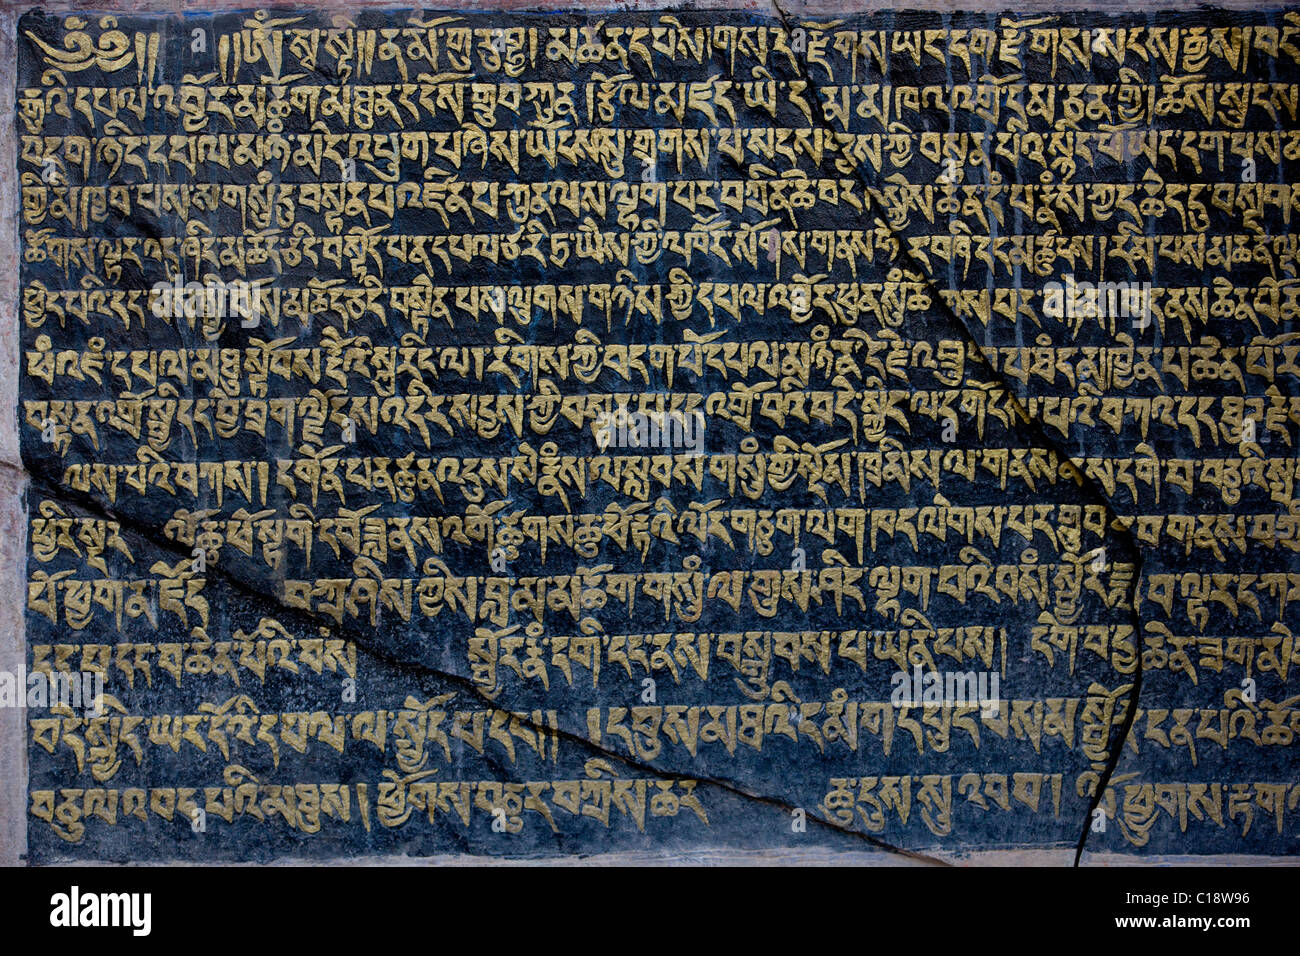 Tibetan script on cracked stone, Hemis Gompa, (Ladakh) Jammu & Kashmir, India Stock Photo